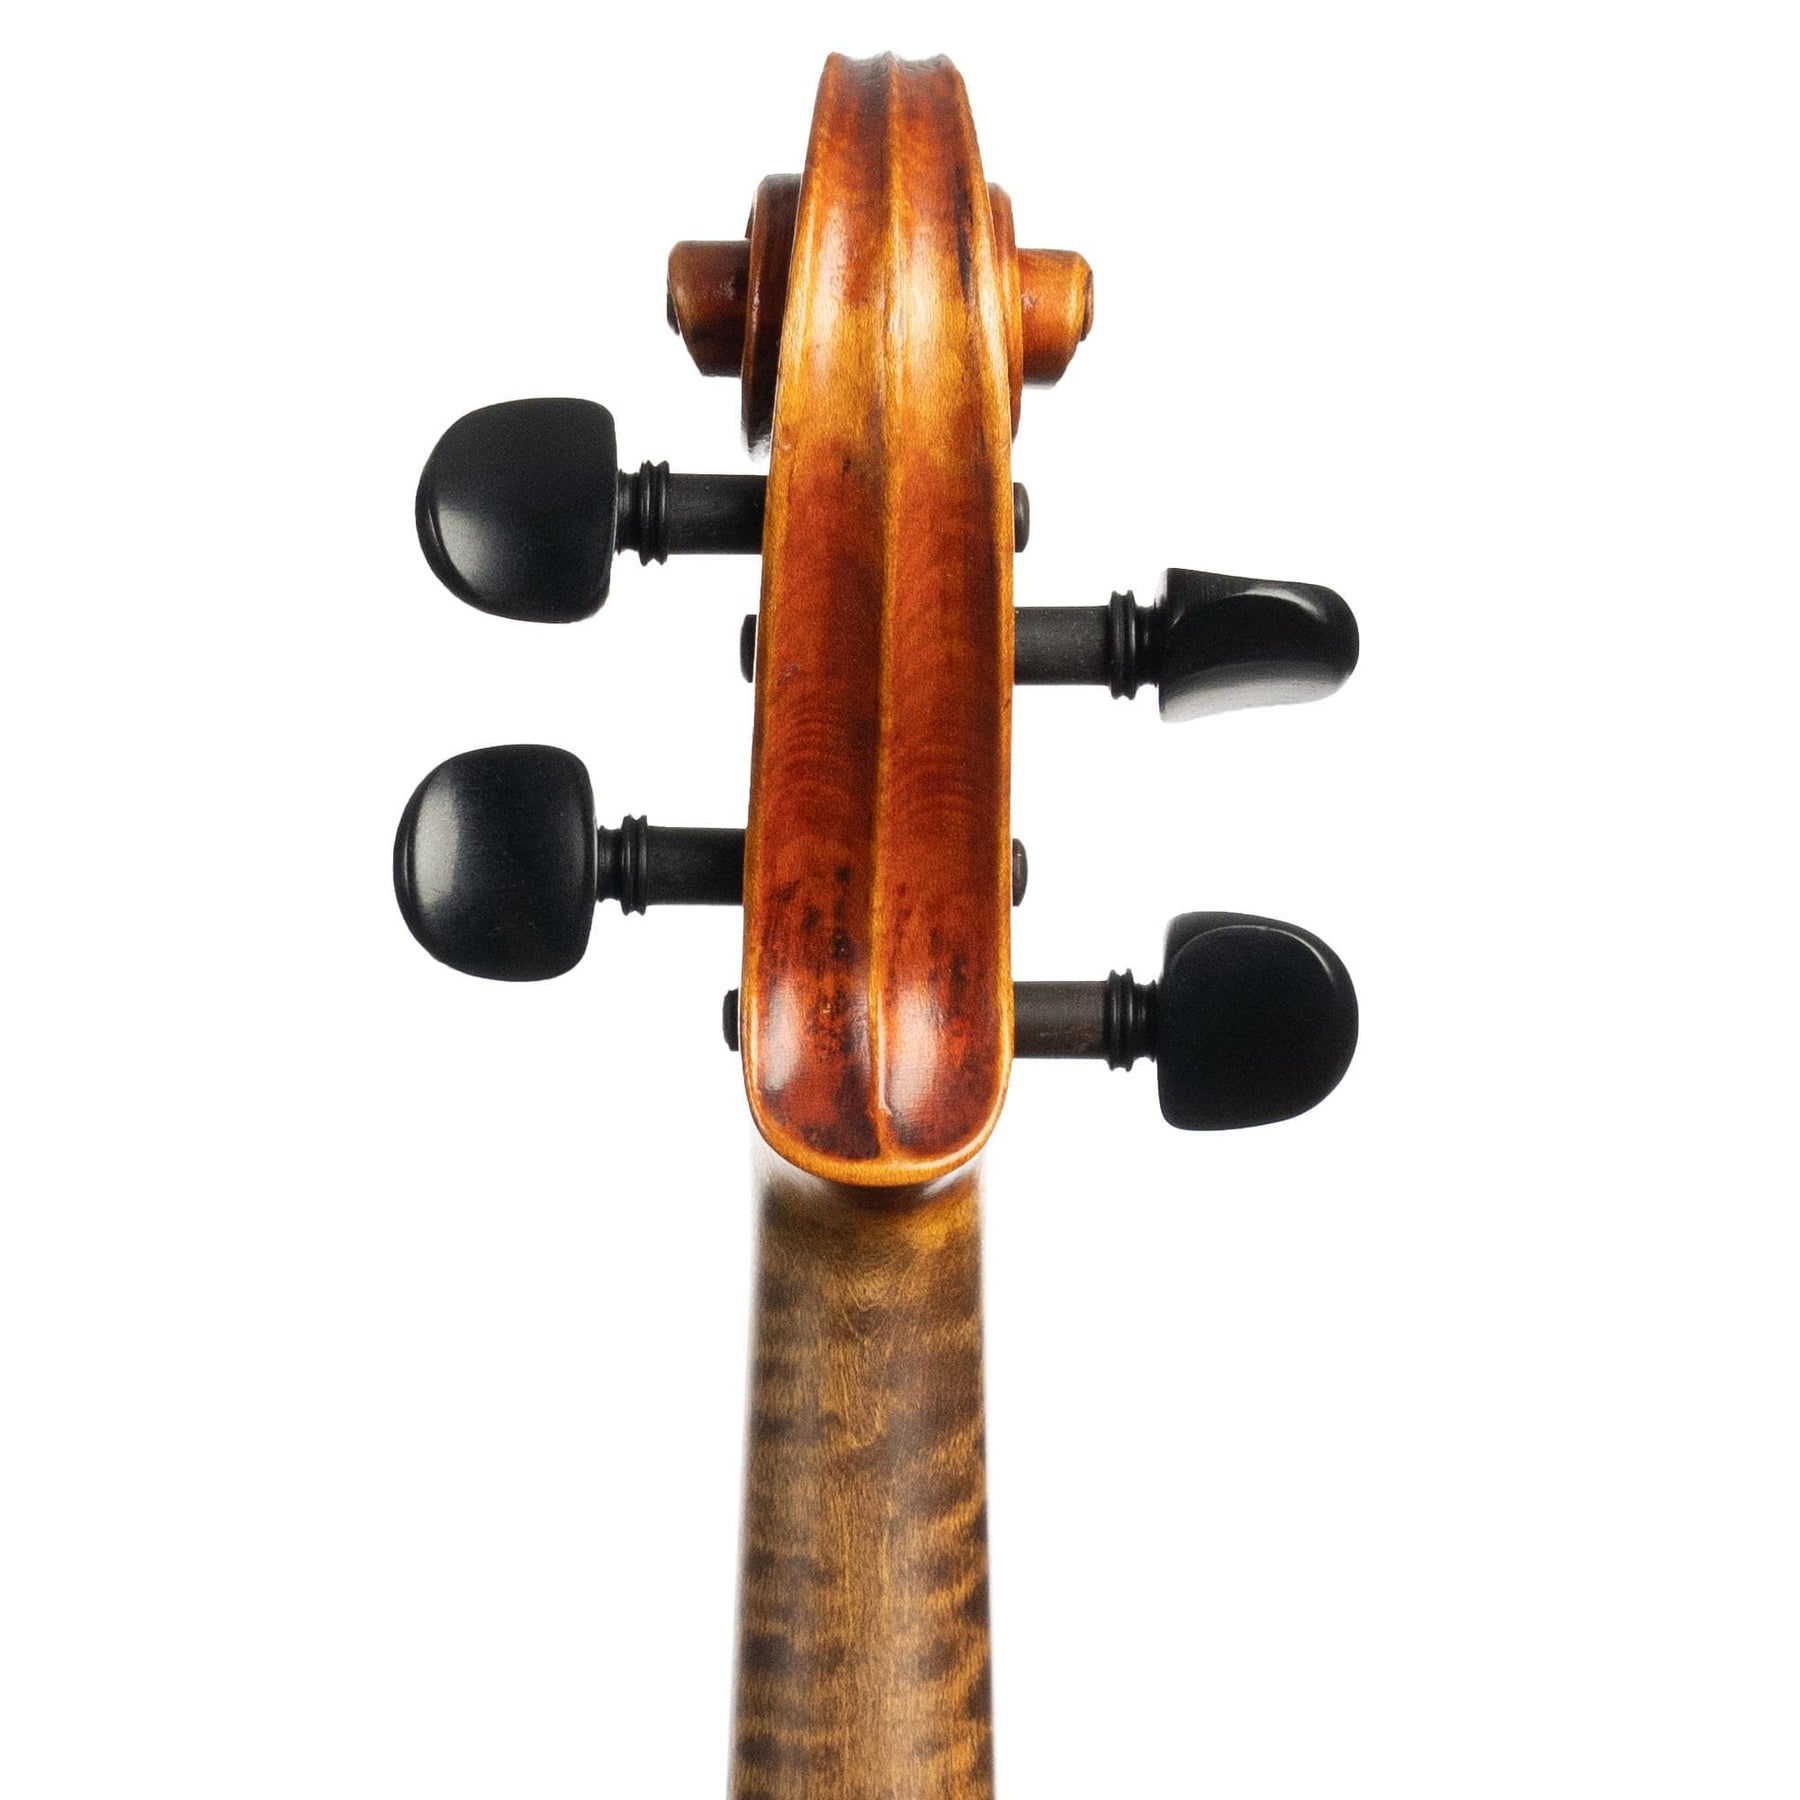 E.H. Roth VIR Violin, Markneukirchen, 1923